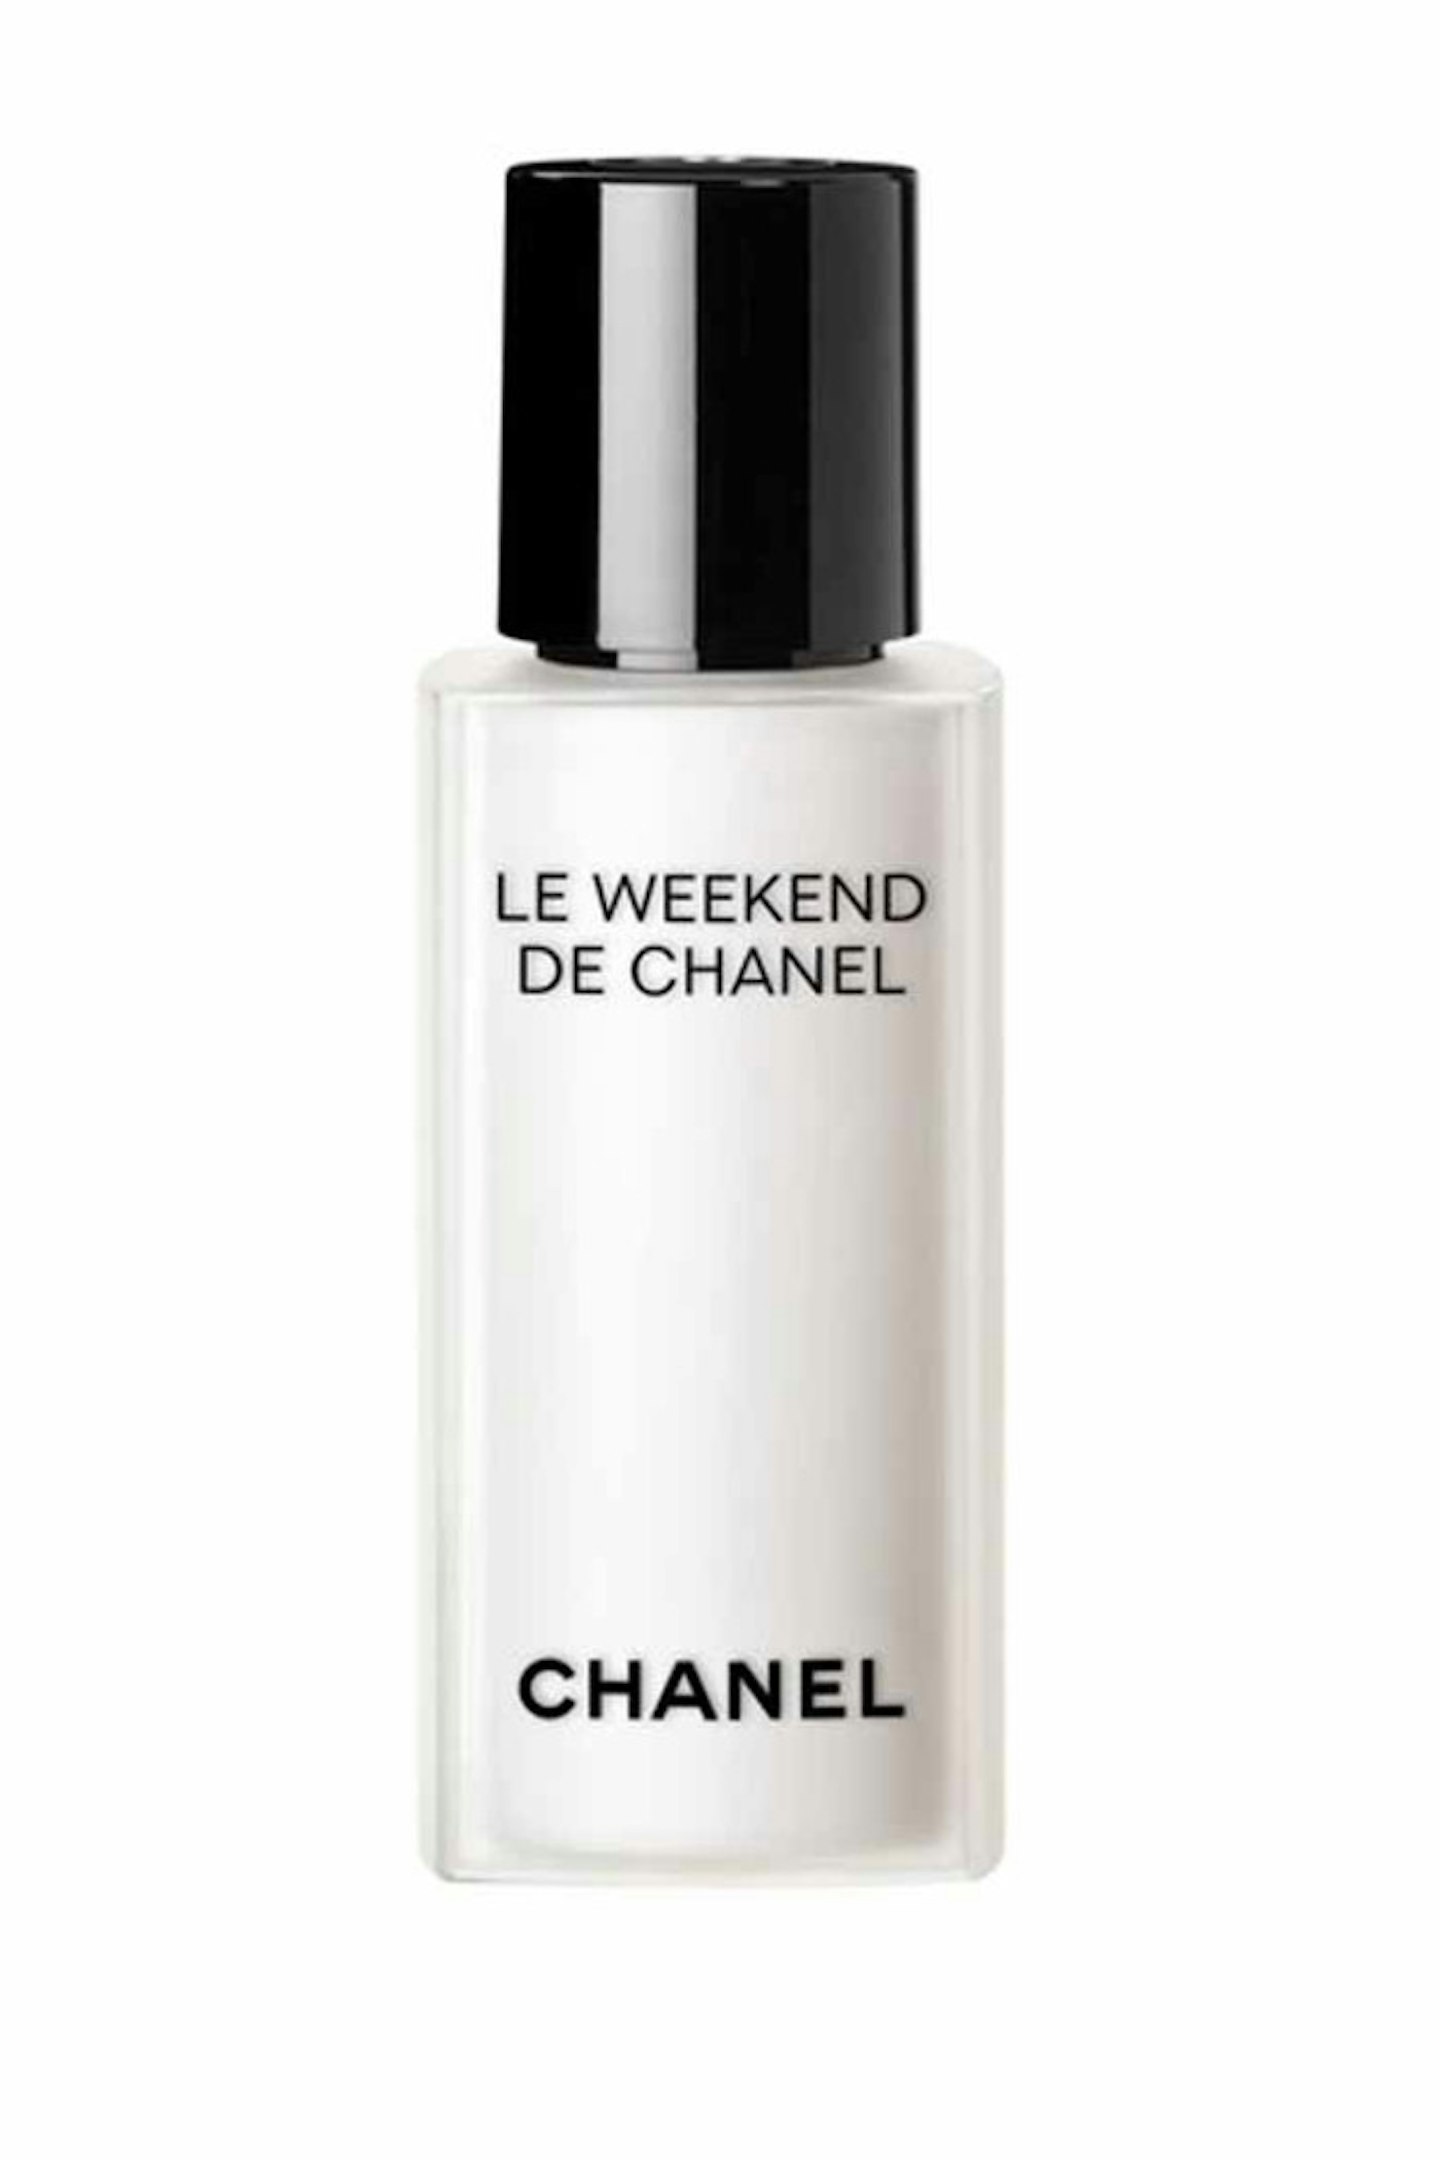 Chanel Le Weekend de Chanel Weekly Renewing Face Care, £72.00